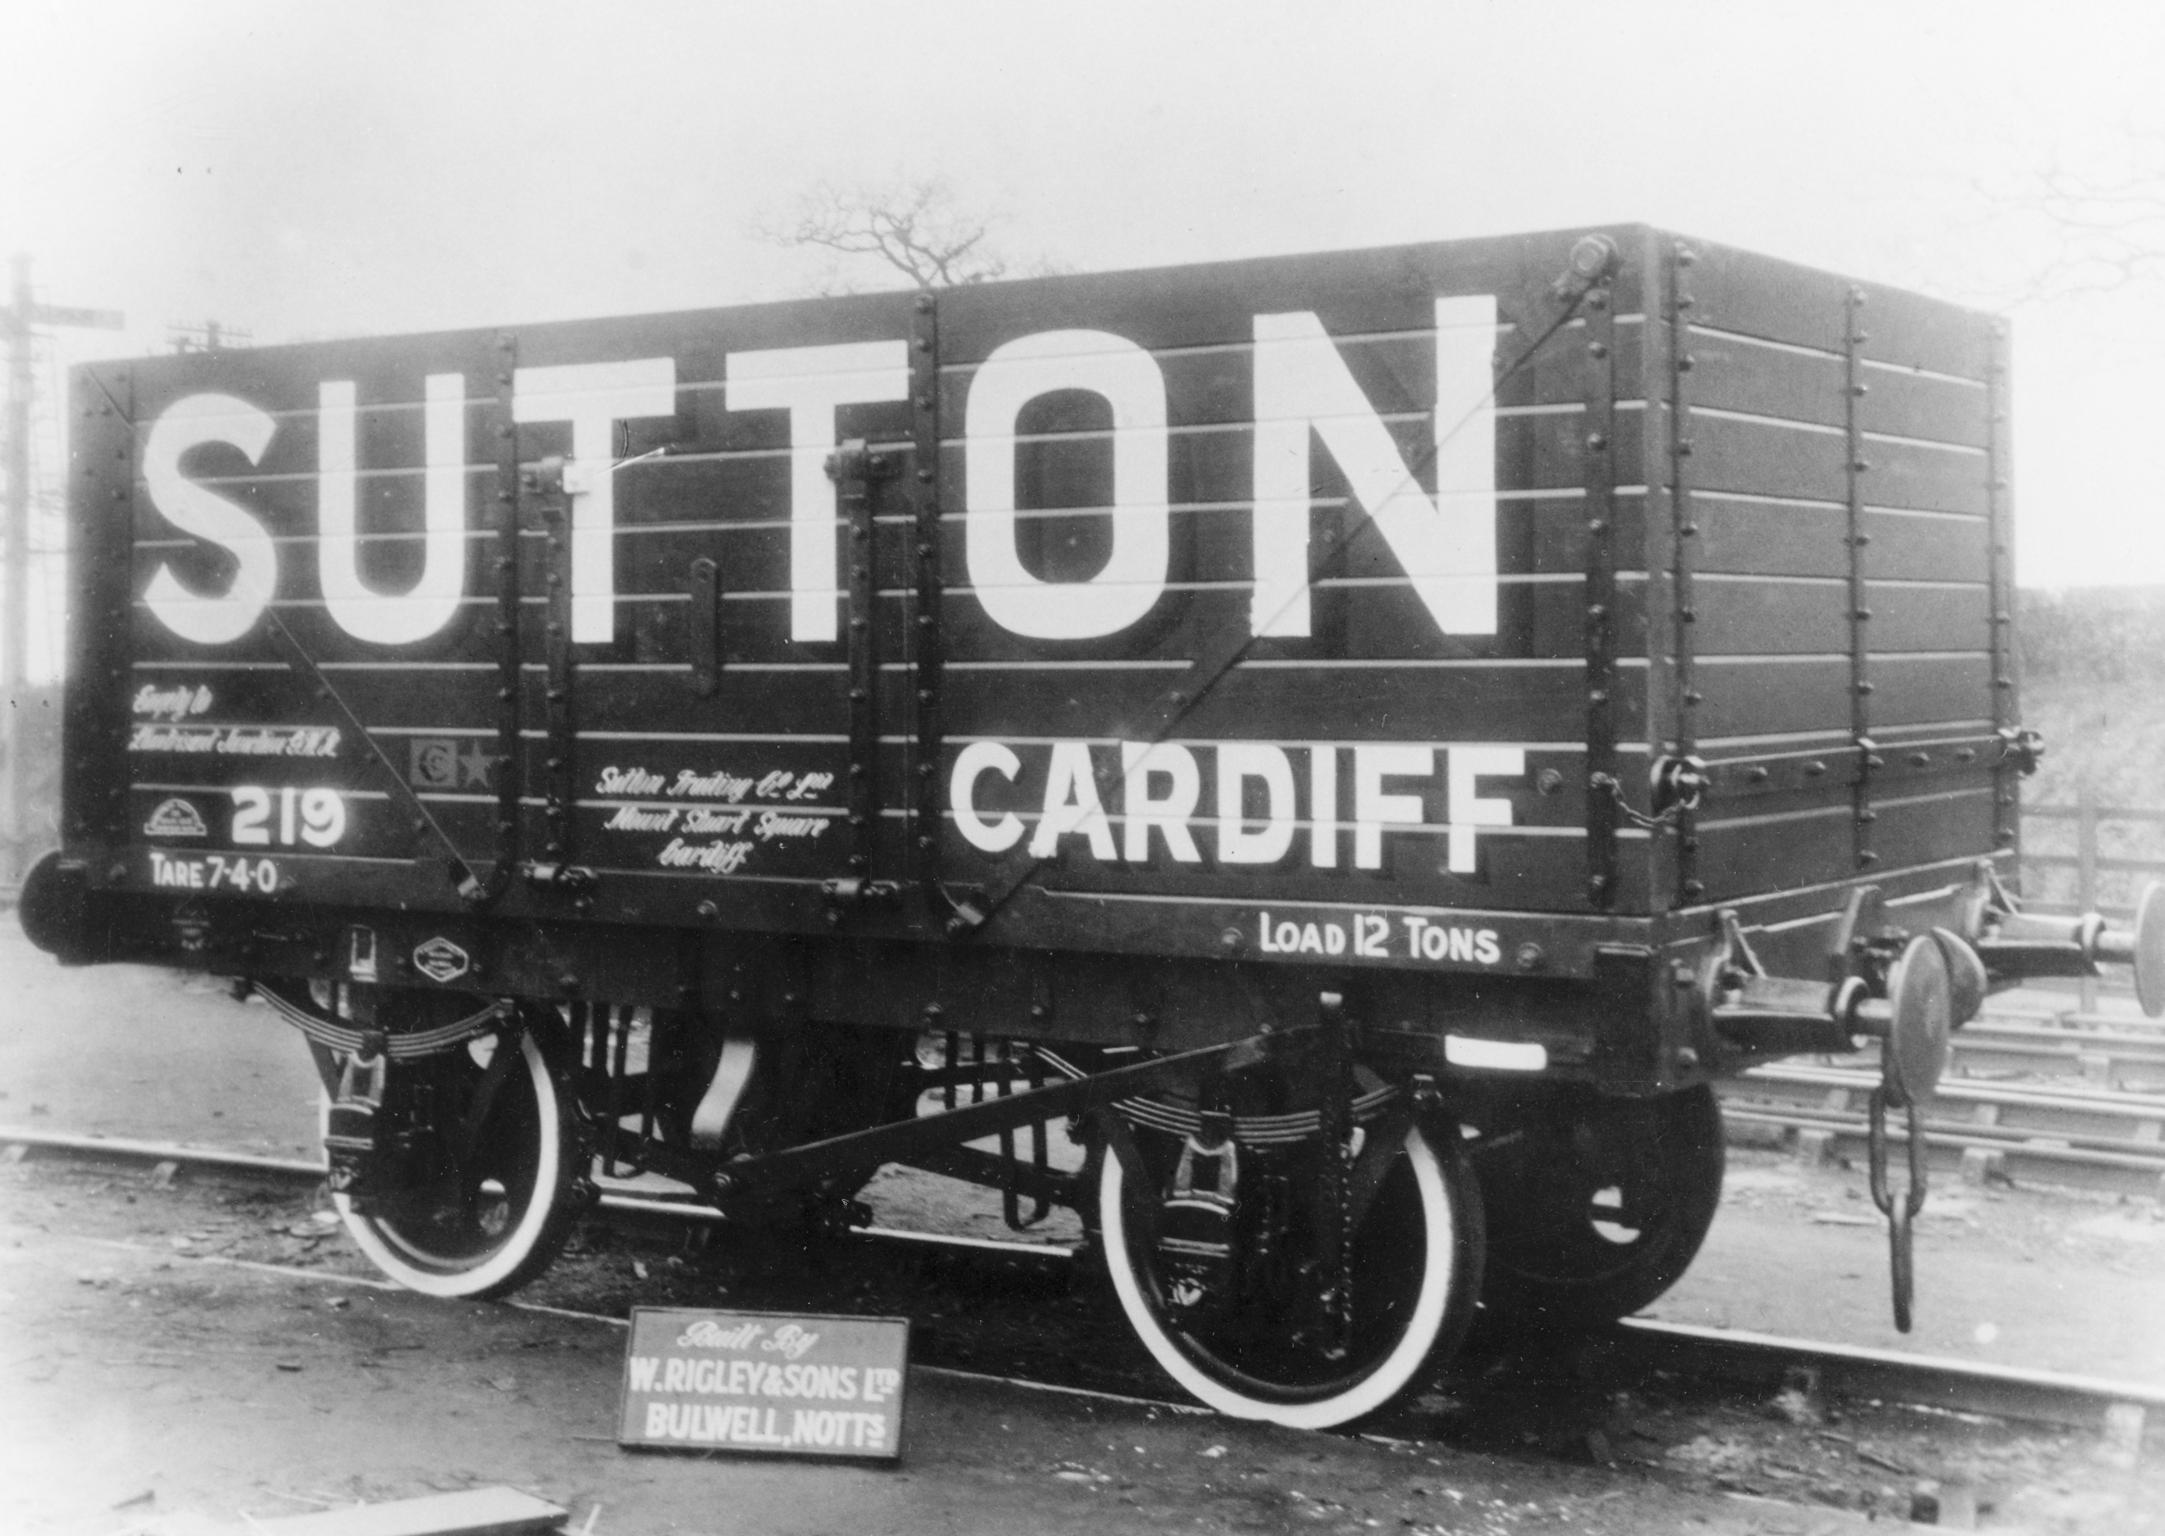 Coal wagon, photograph